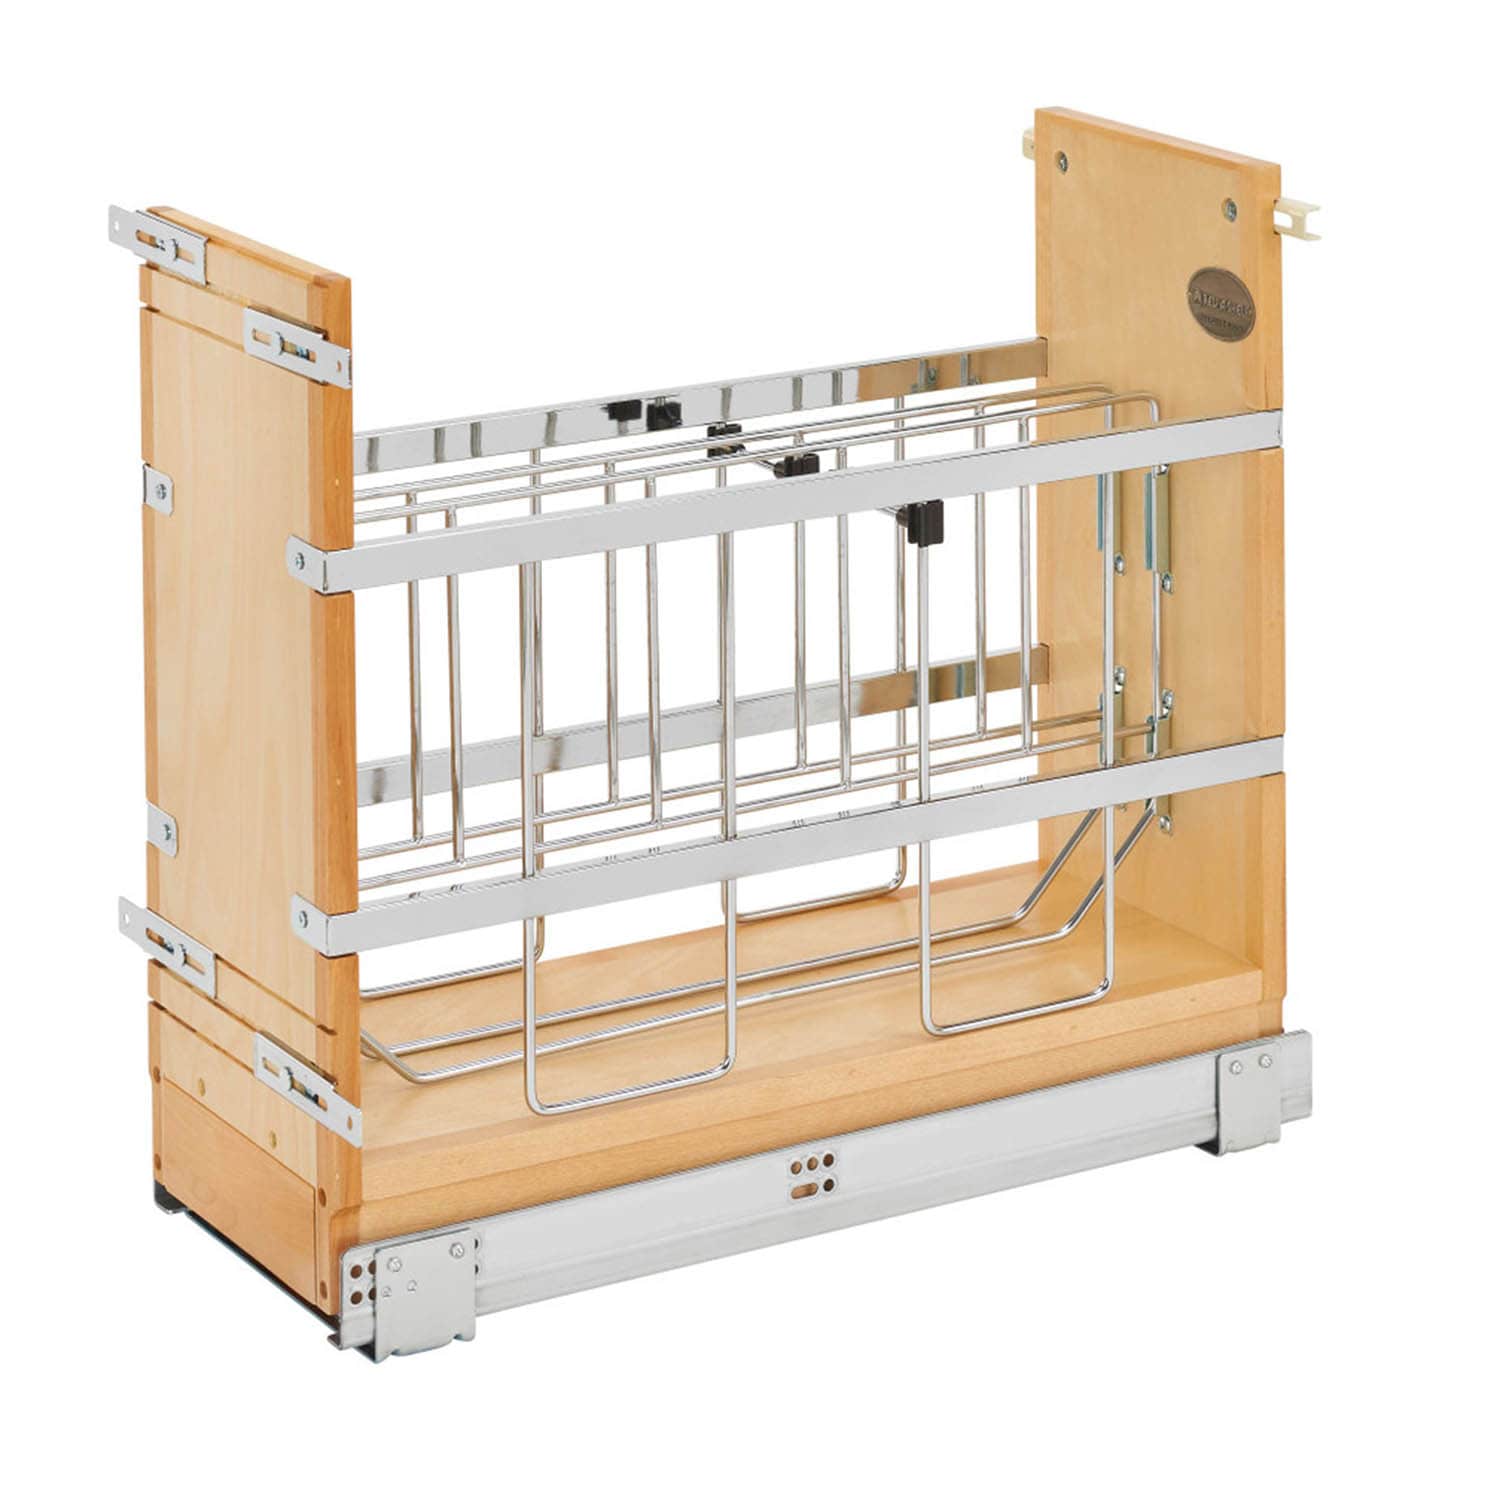 Wooden Vertical Cabinet Tray Divider & Organizer